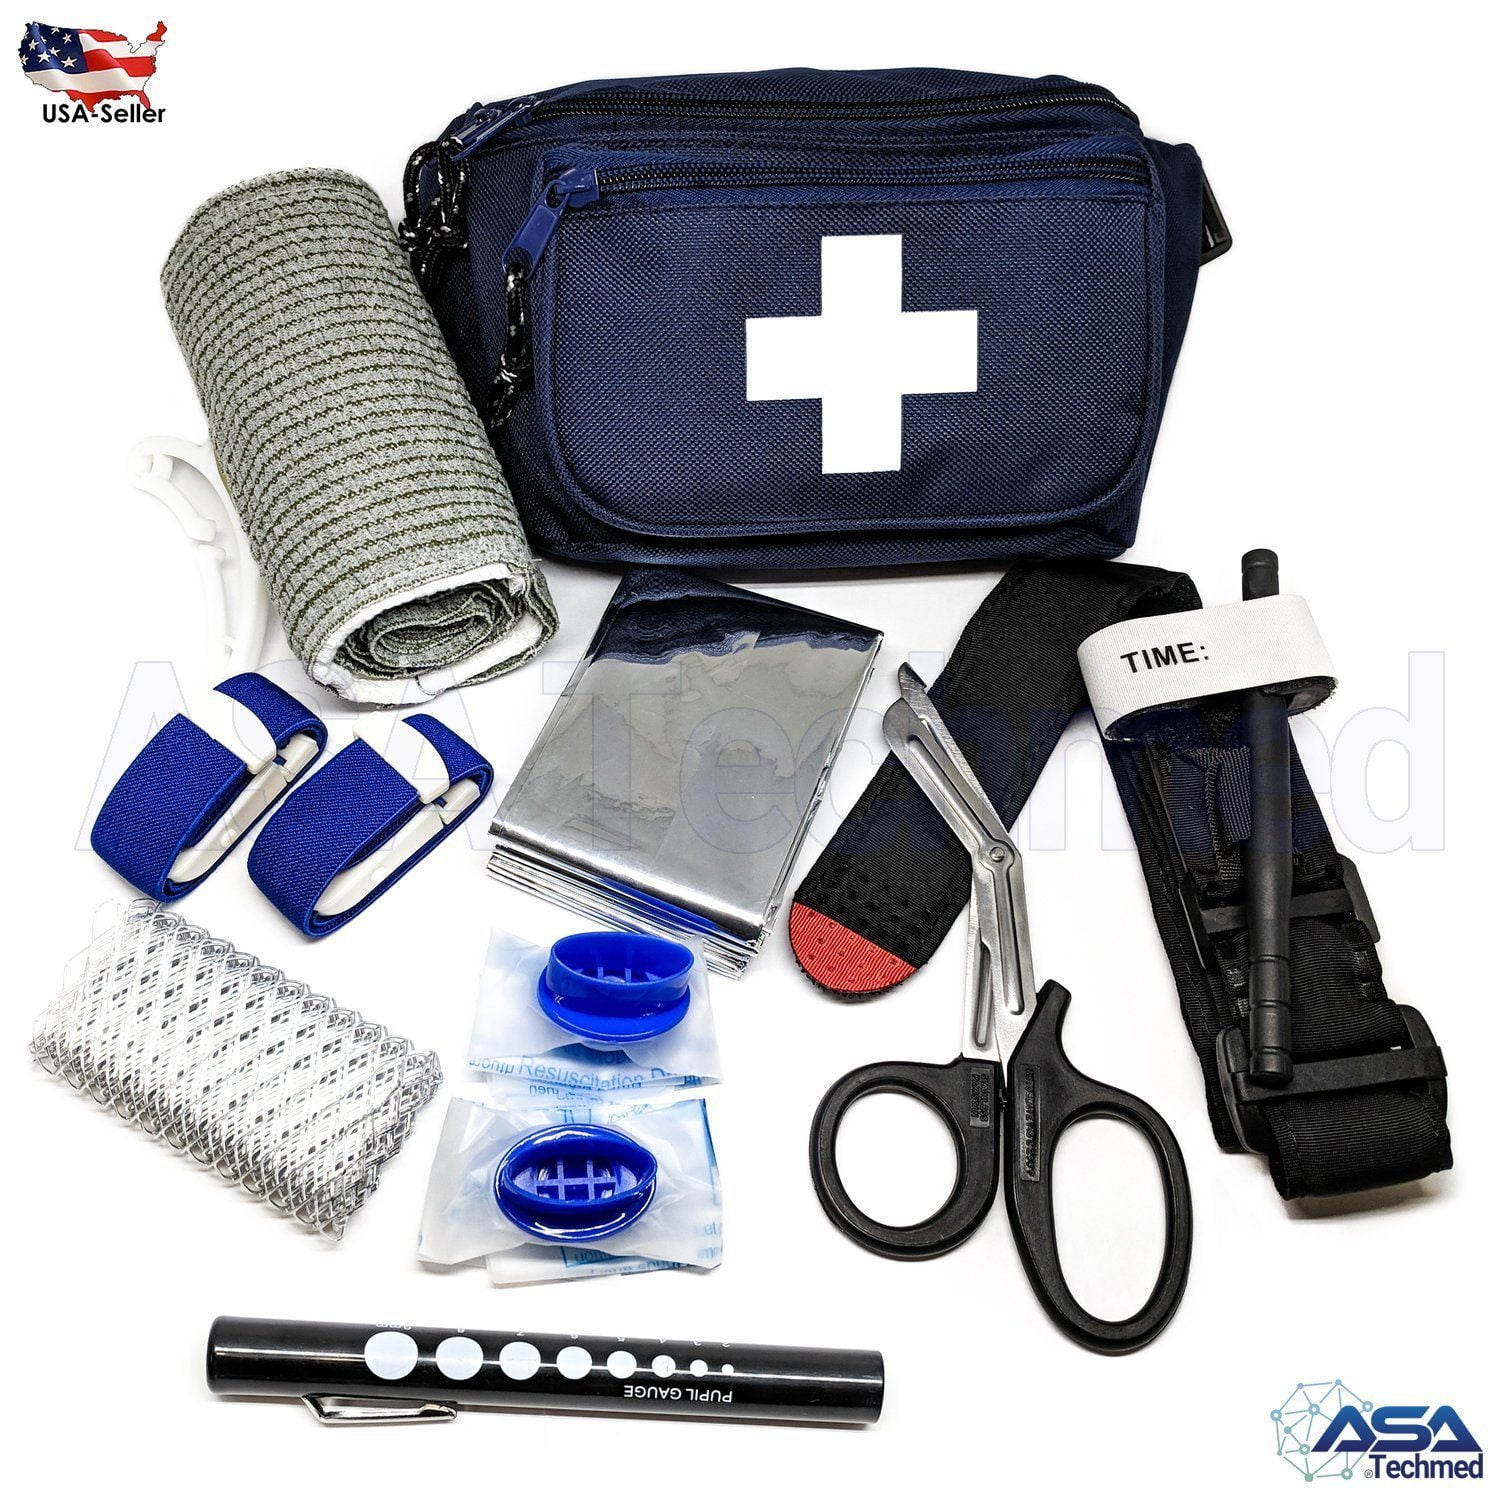 Details about   ASATechmed Premium IFAK Kit Tools-Stop Bleeding Tactical Medical Kit,USA! 